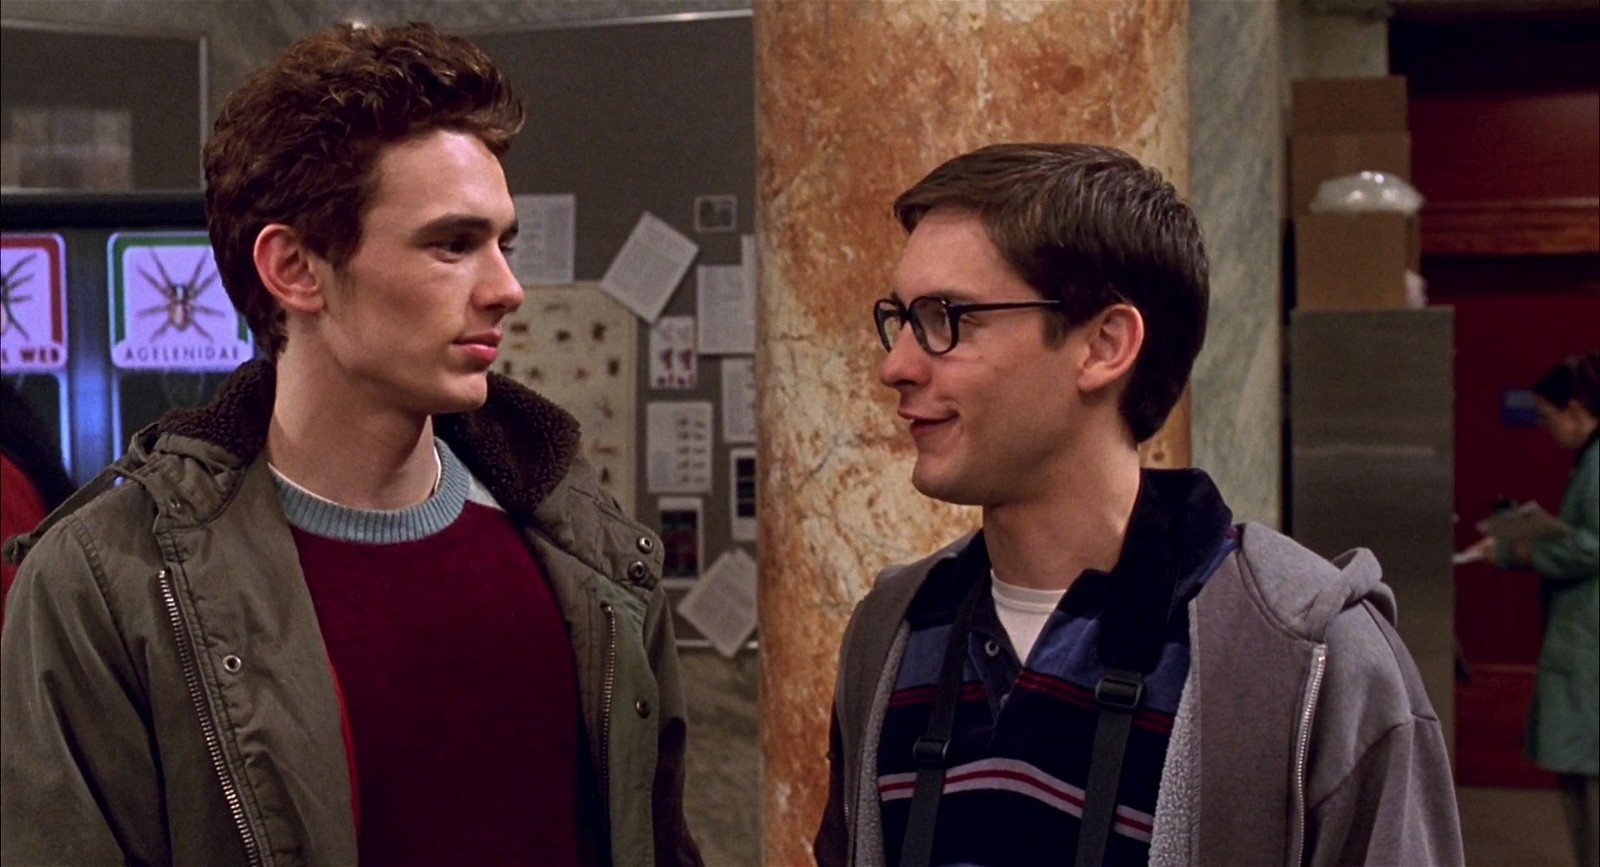 James Franco has Harry Osborn alongside Tobey Maguire's Peter Parker